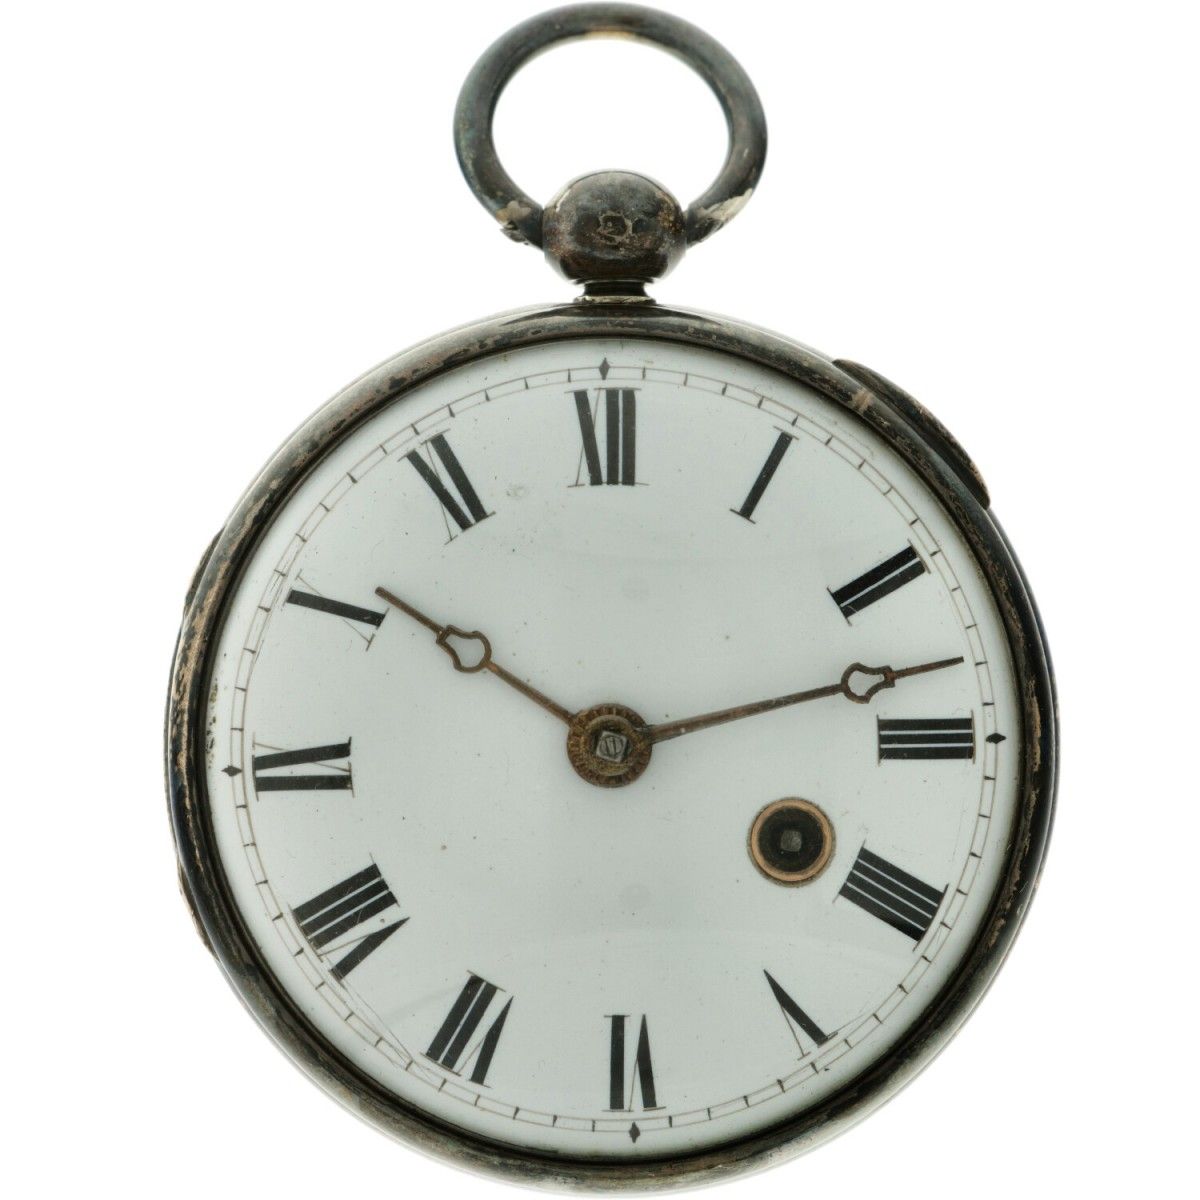 H.J. Byaro, Kentish Town Snek Spillegang - Men's pocketwatch - apprx. 1750. Gehä&hellip;